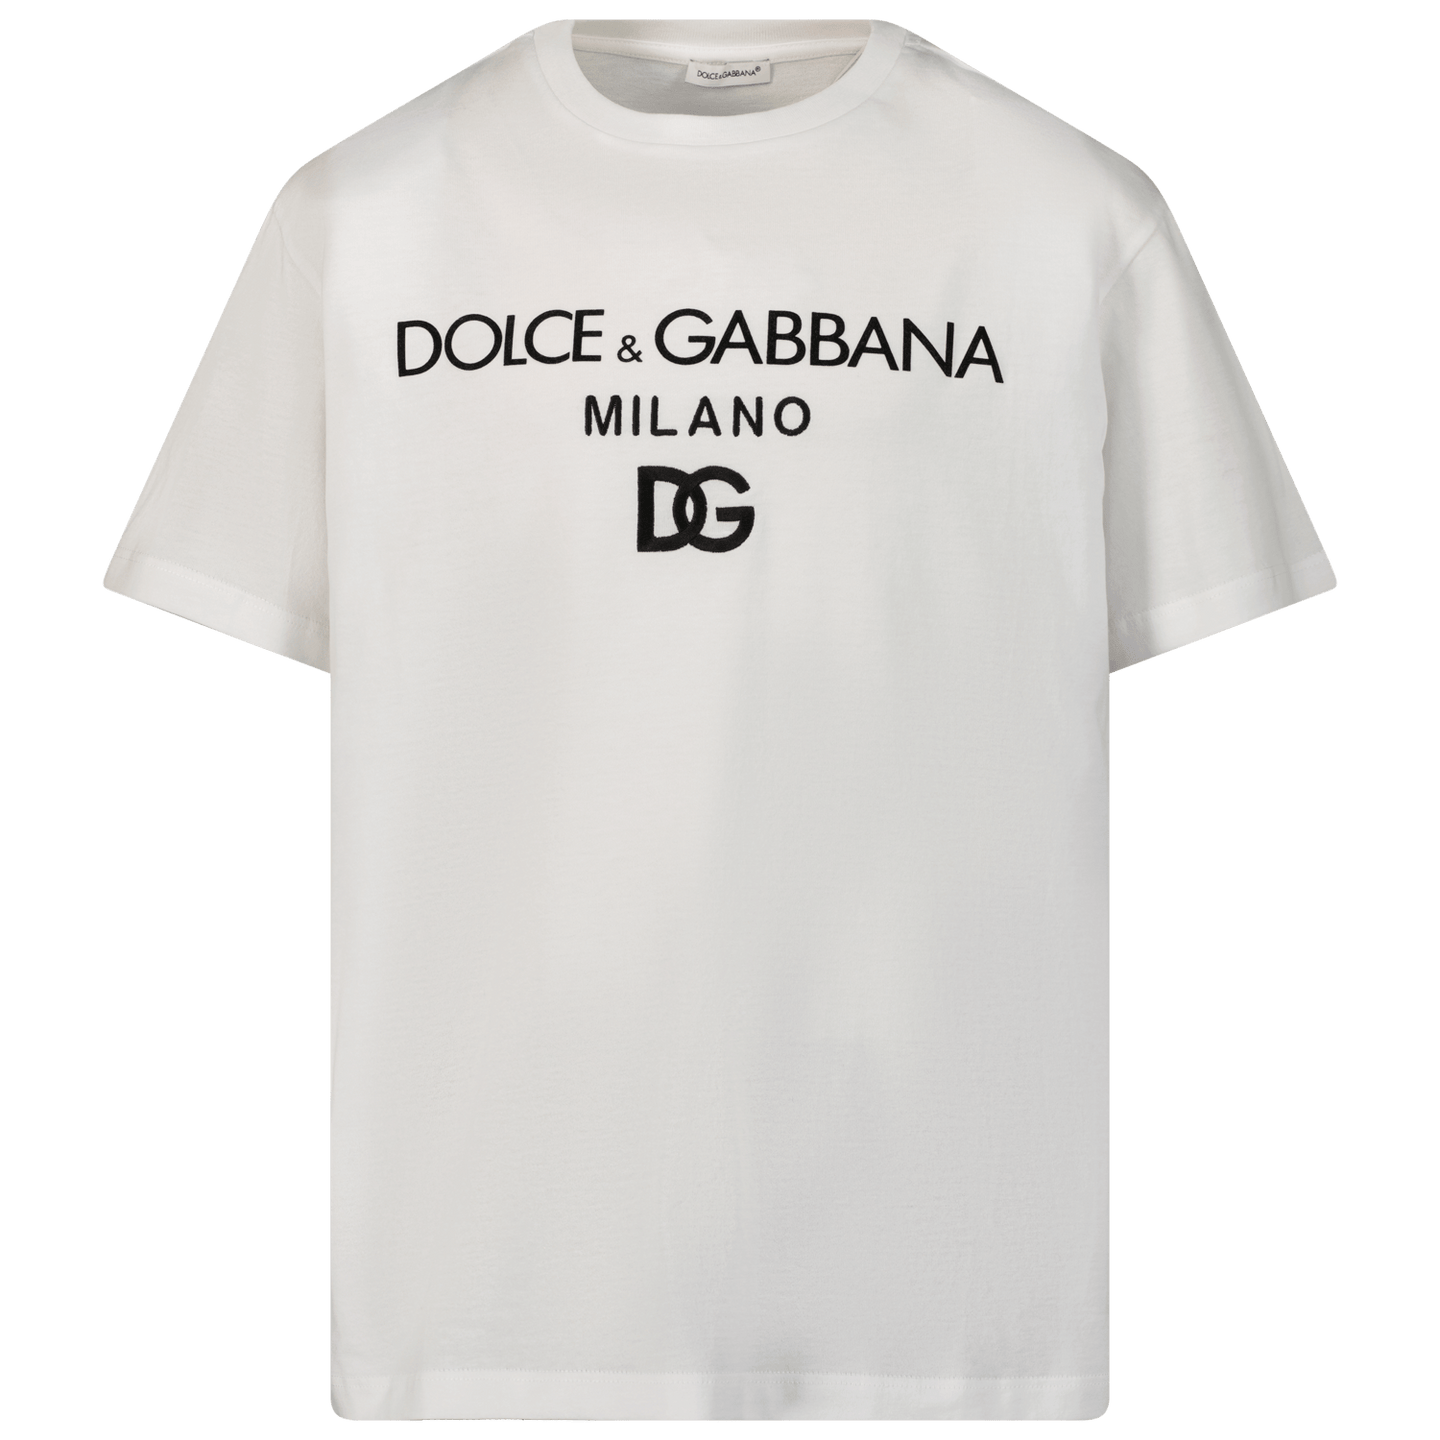 Dolce & Gabbana Kinder Jongens T-Shirt Wit 2Y